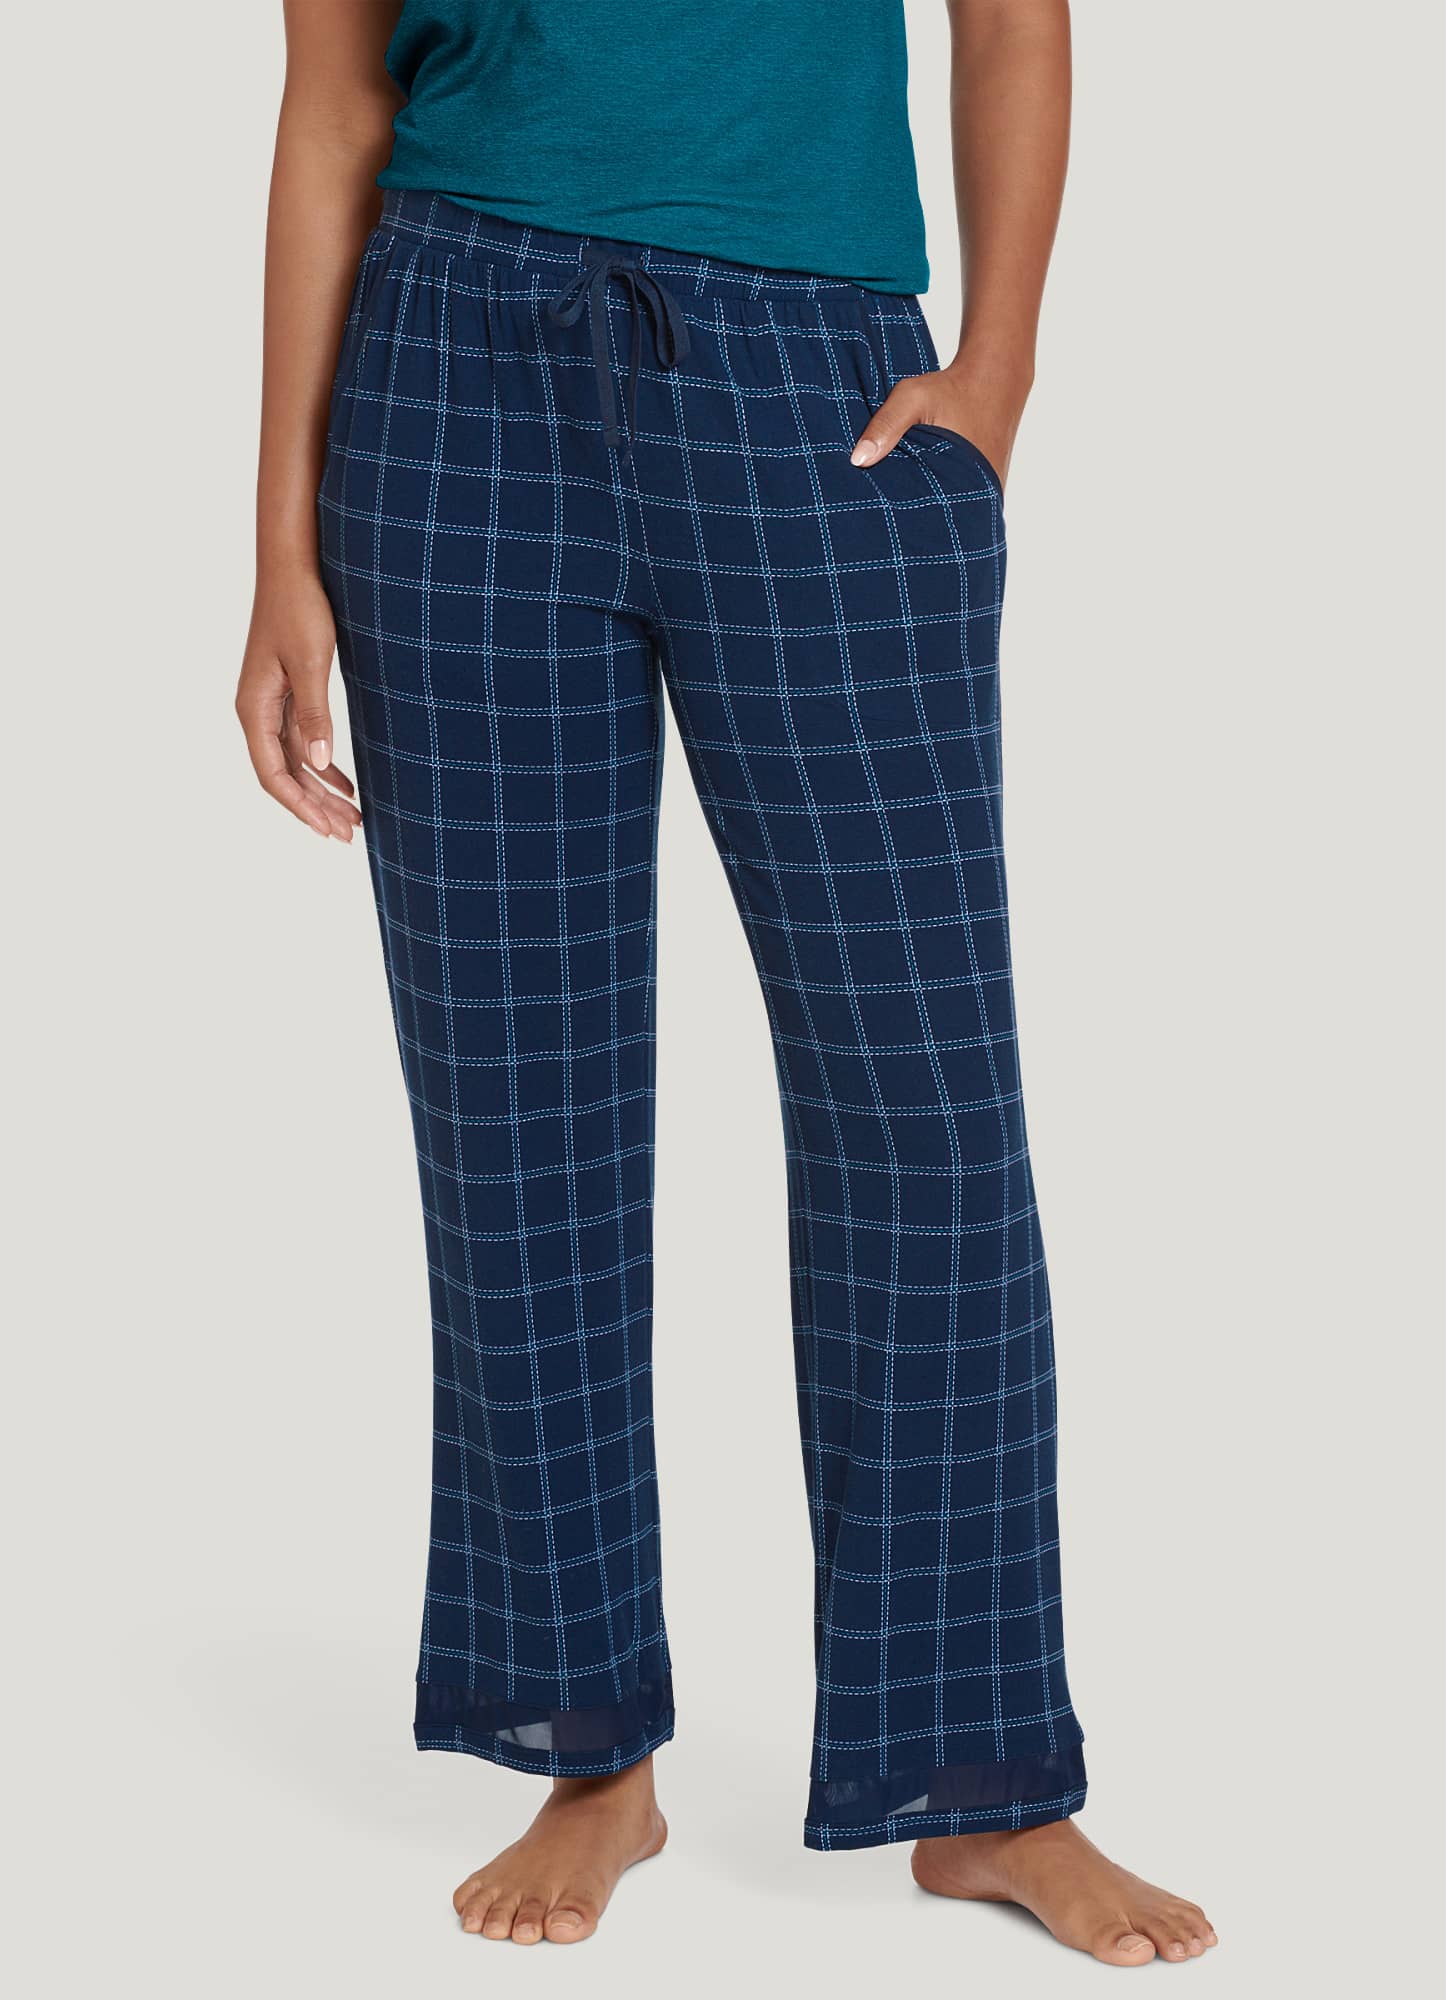 Just Love 100% Cotton Women's Capri Pajama Pants Sleepwear - Comfortable  and Stylish (Blue - Big Cloud, Medium)